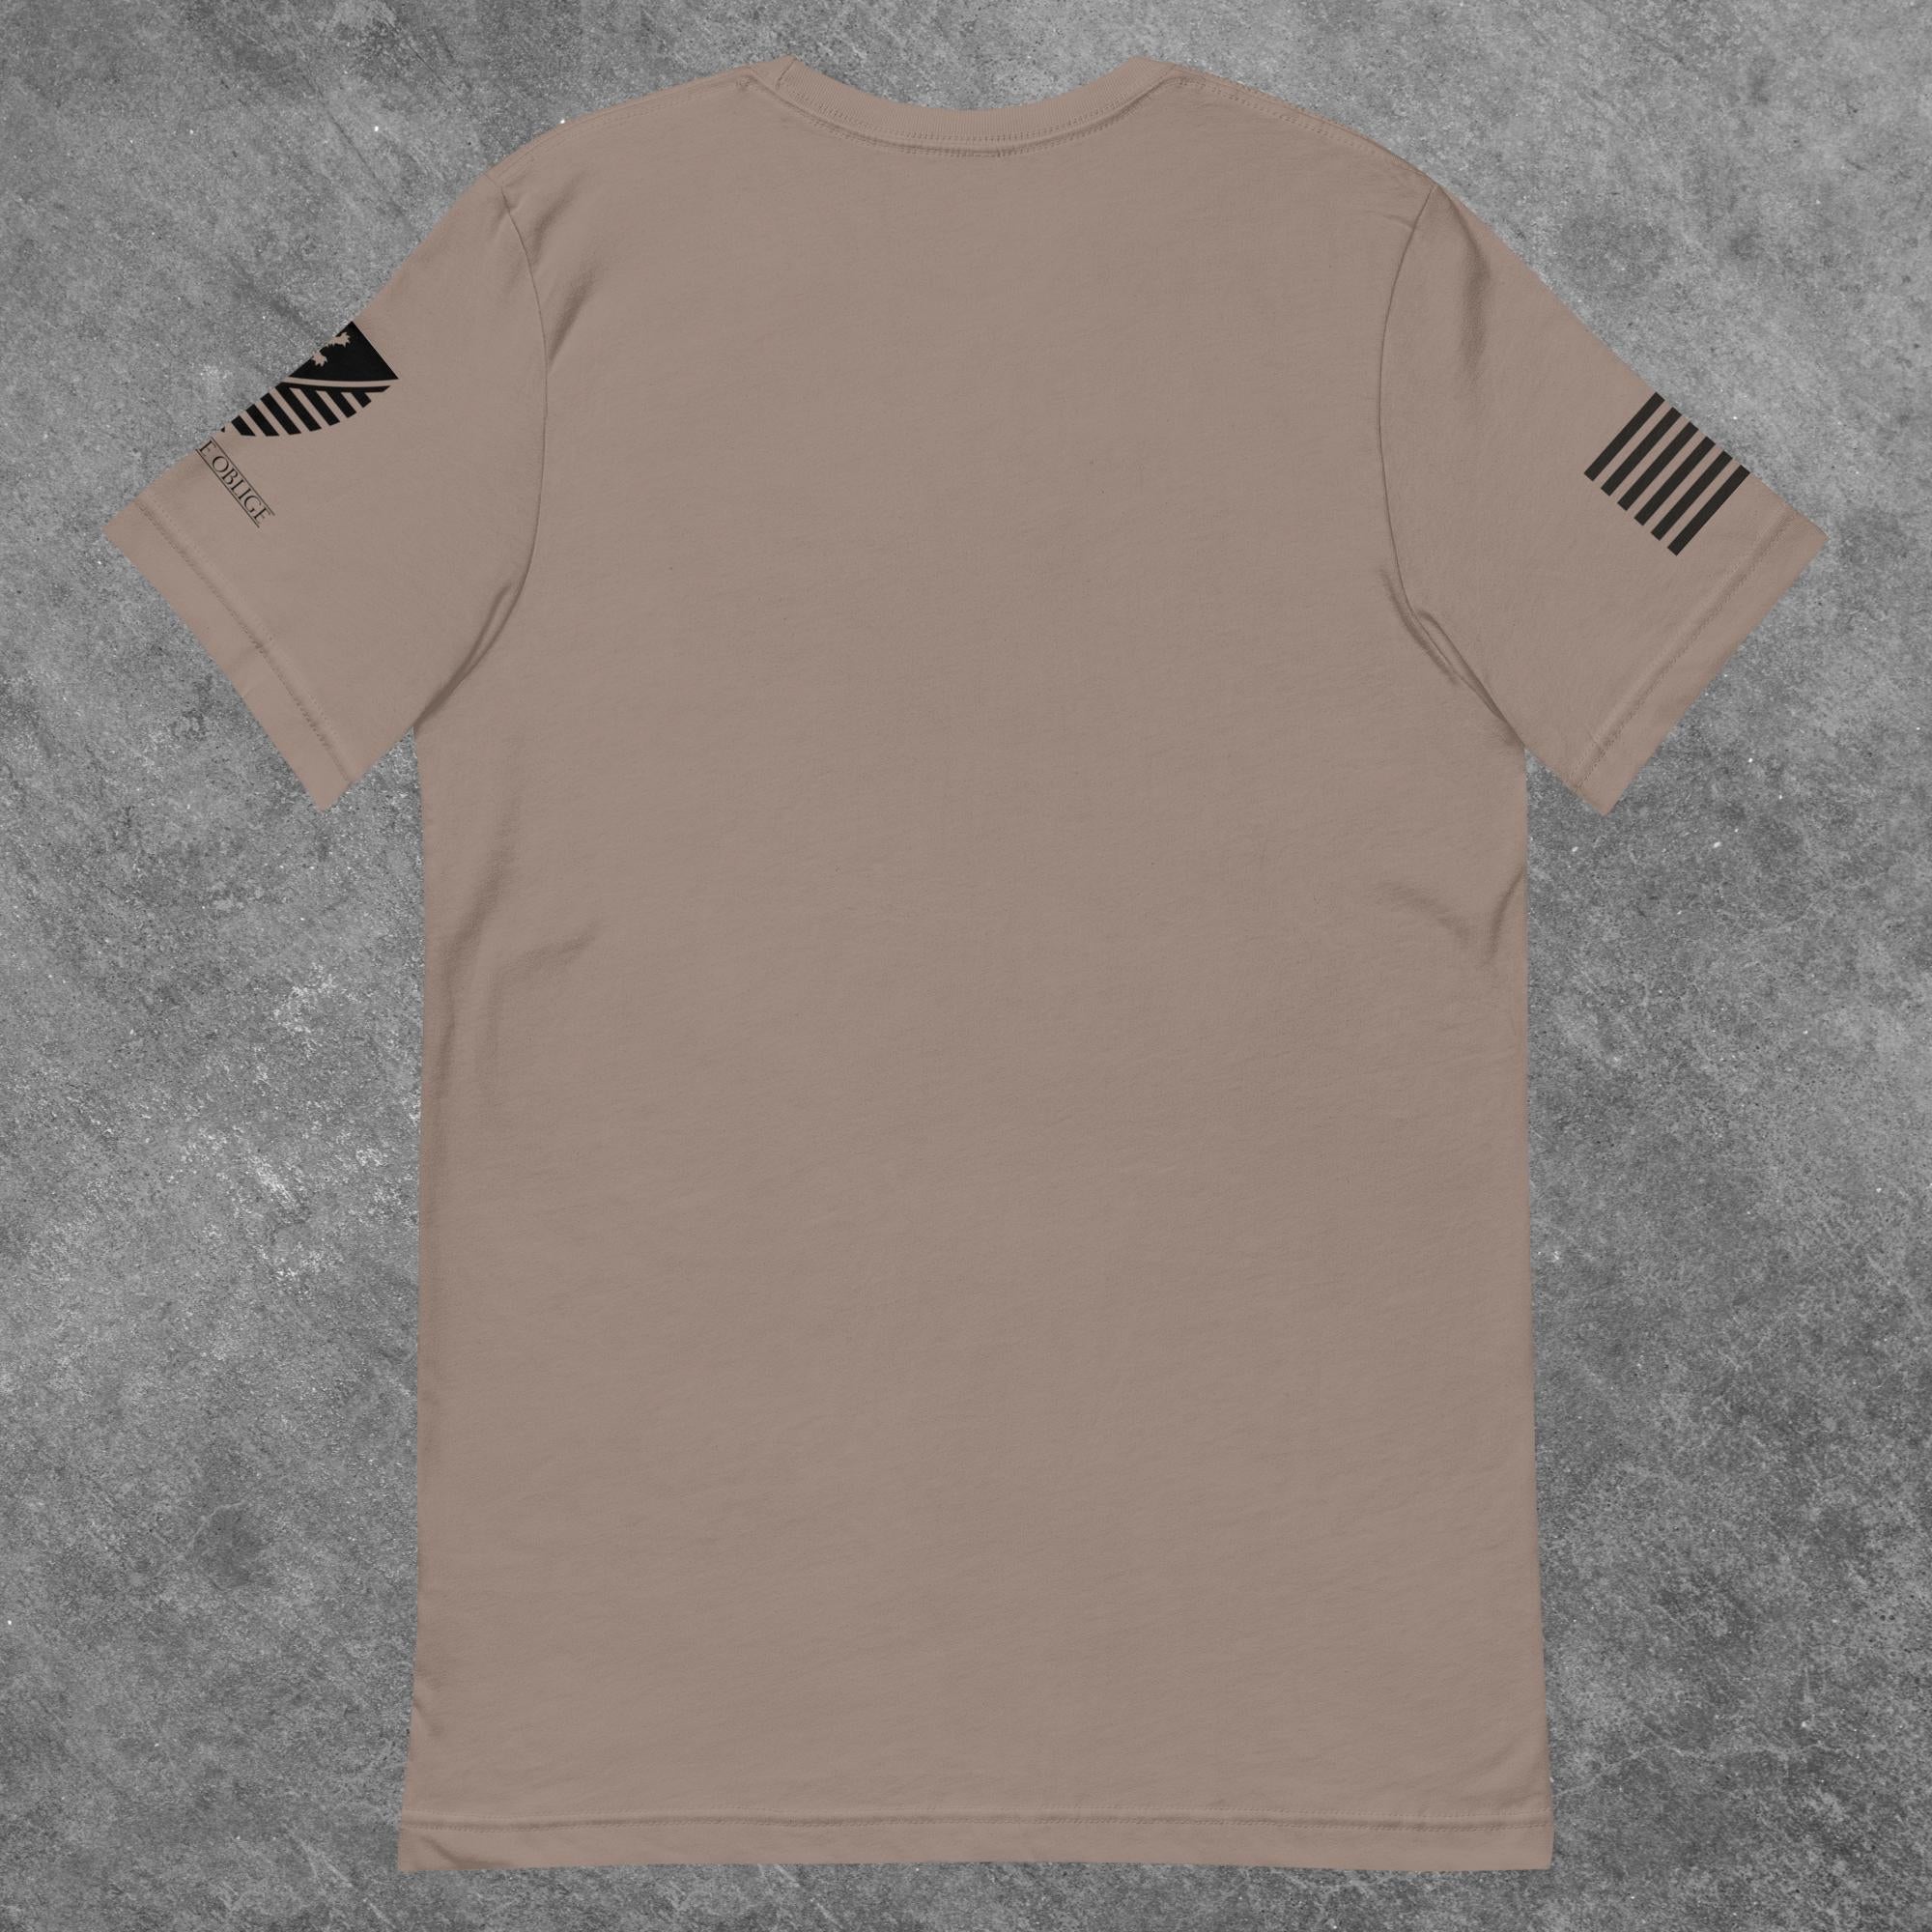 Modern Day Minuteman T-shirt - Noblesse Oblige Apparel